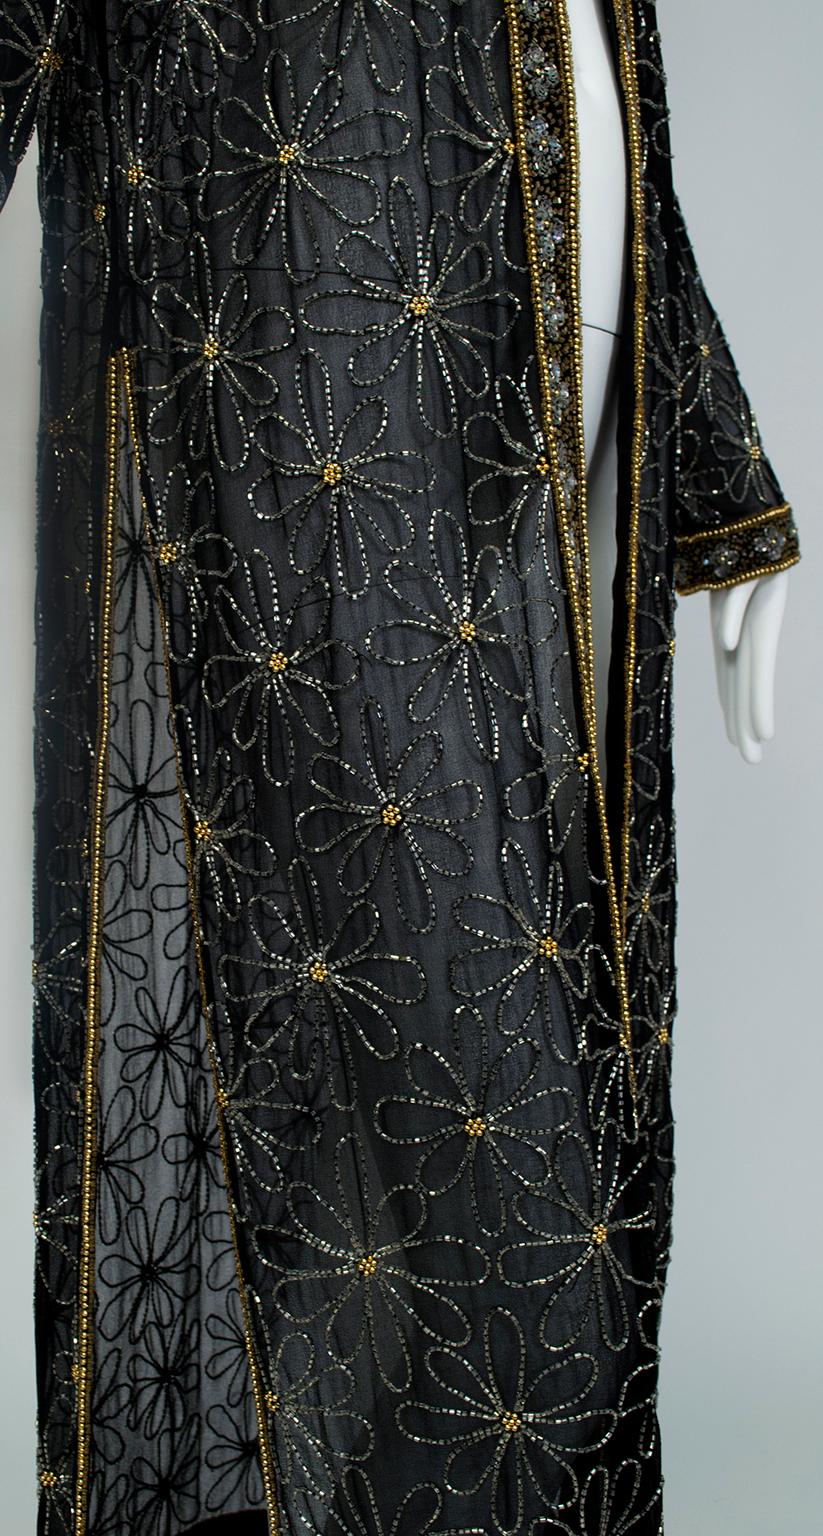 Sheer Indian Black Silk and Gold Bead Kaftan Coat - M-L, 1980s For Sale 1